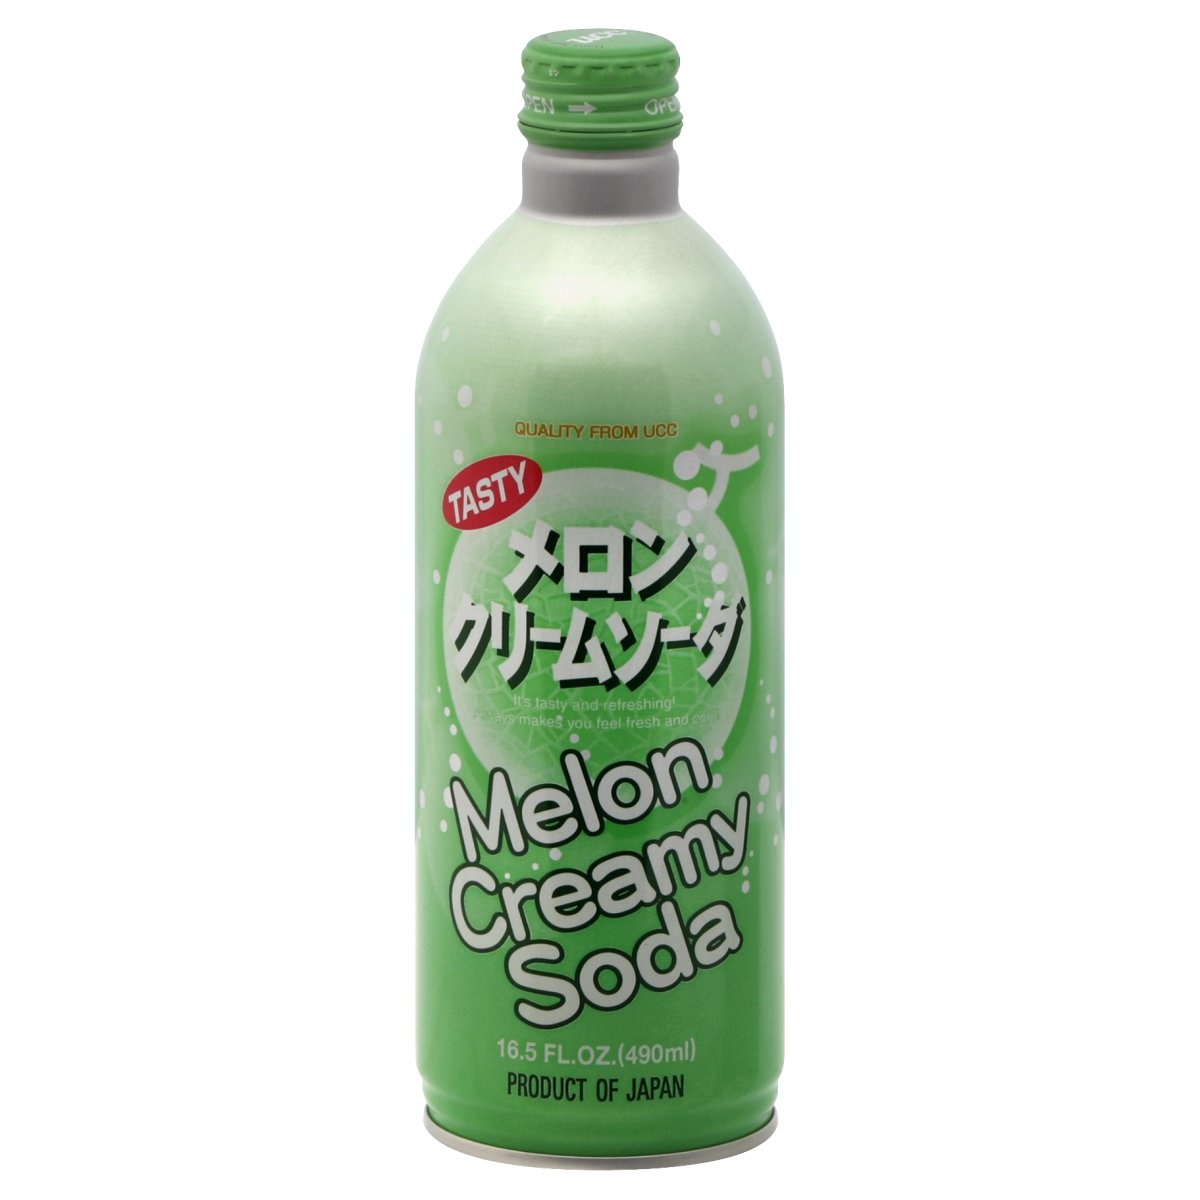 slide 1 of 4, Ucc Melon Creamy Soda, 16.5 oz